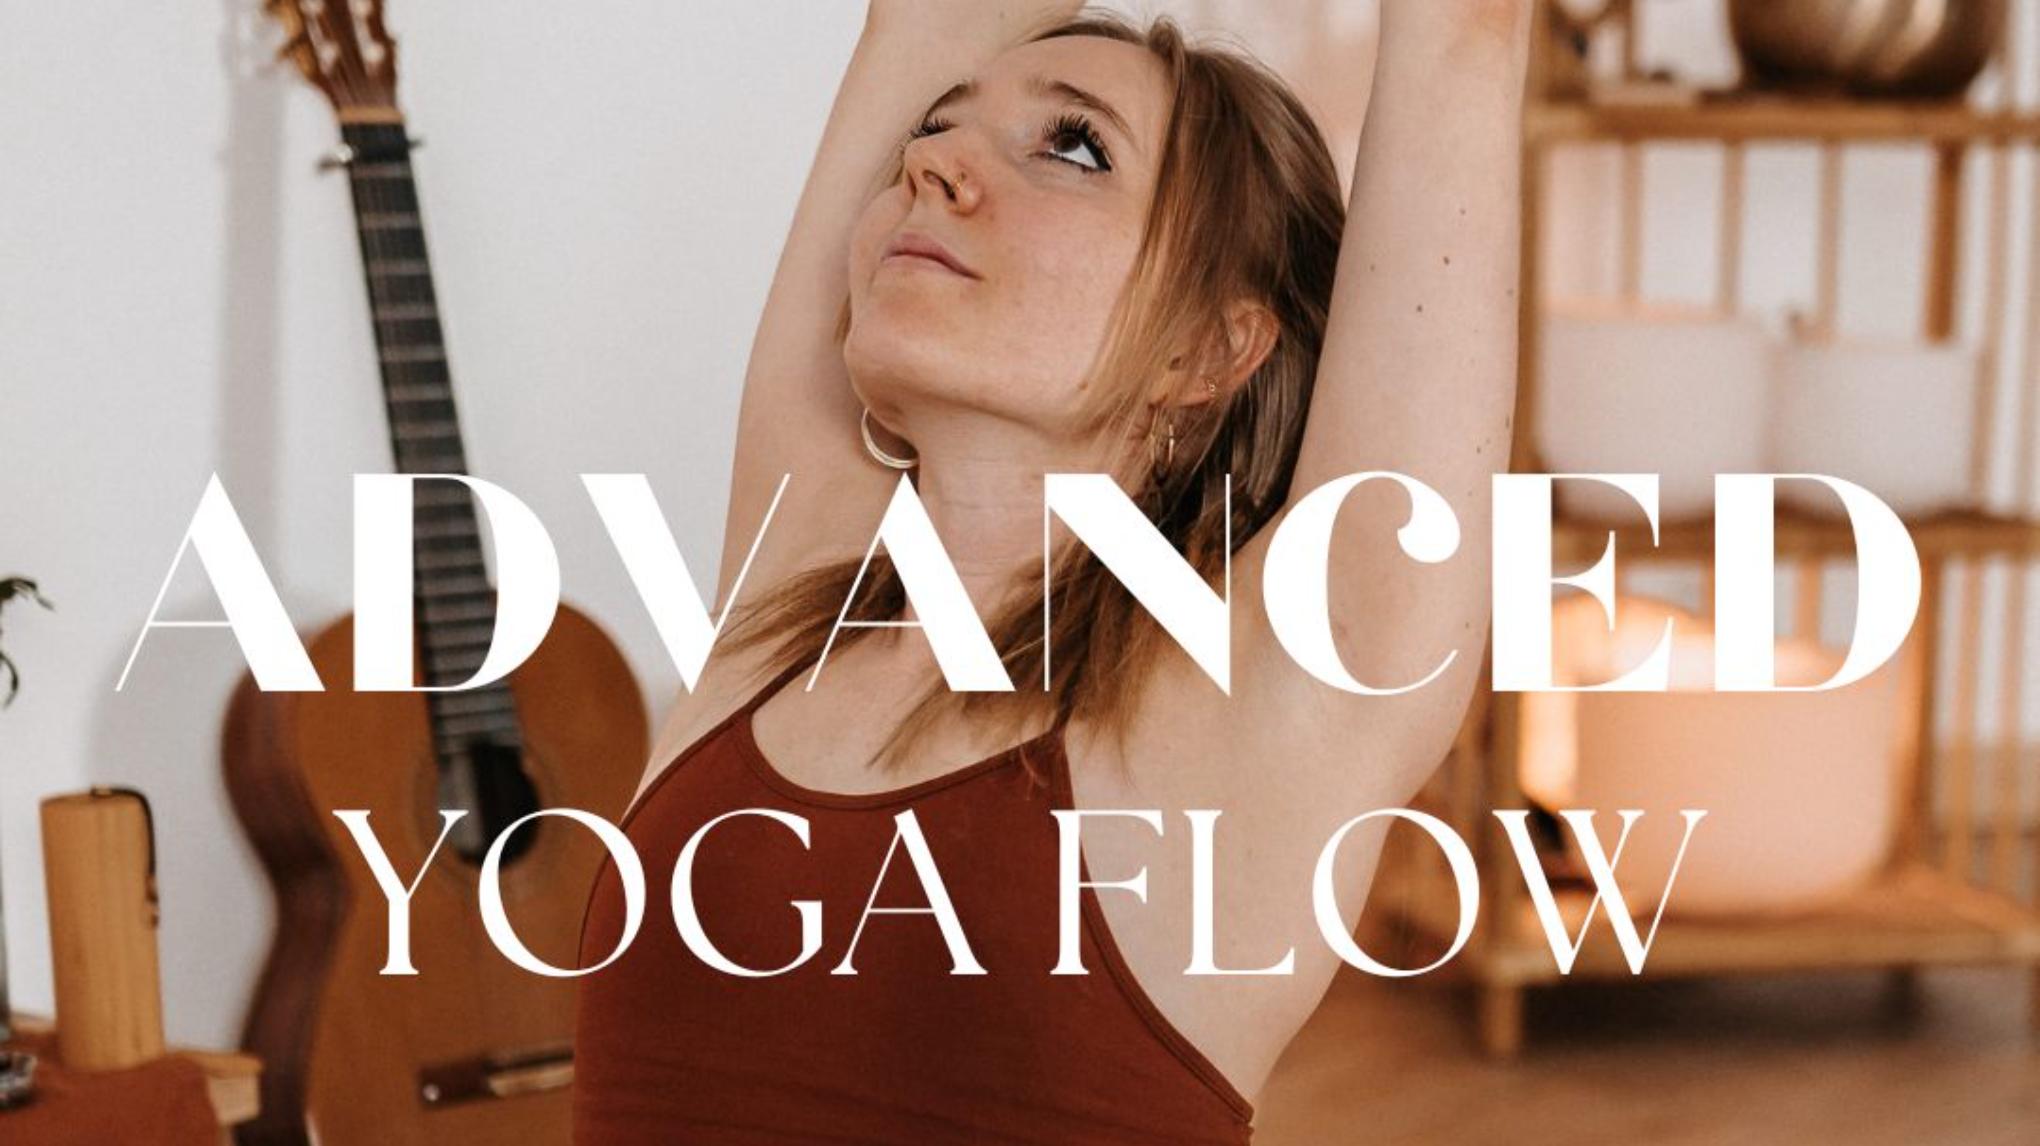 Advanced Yoga Flow